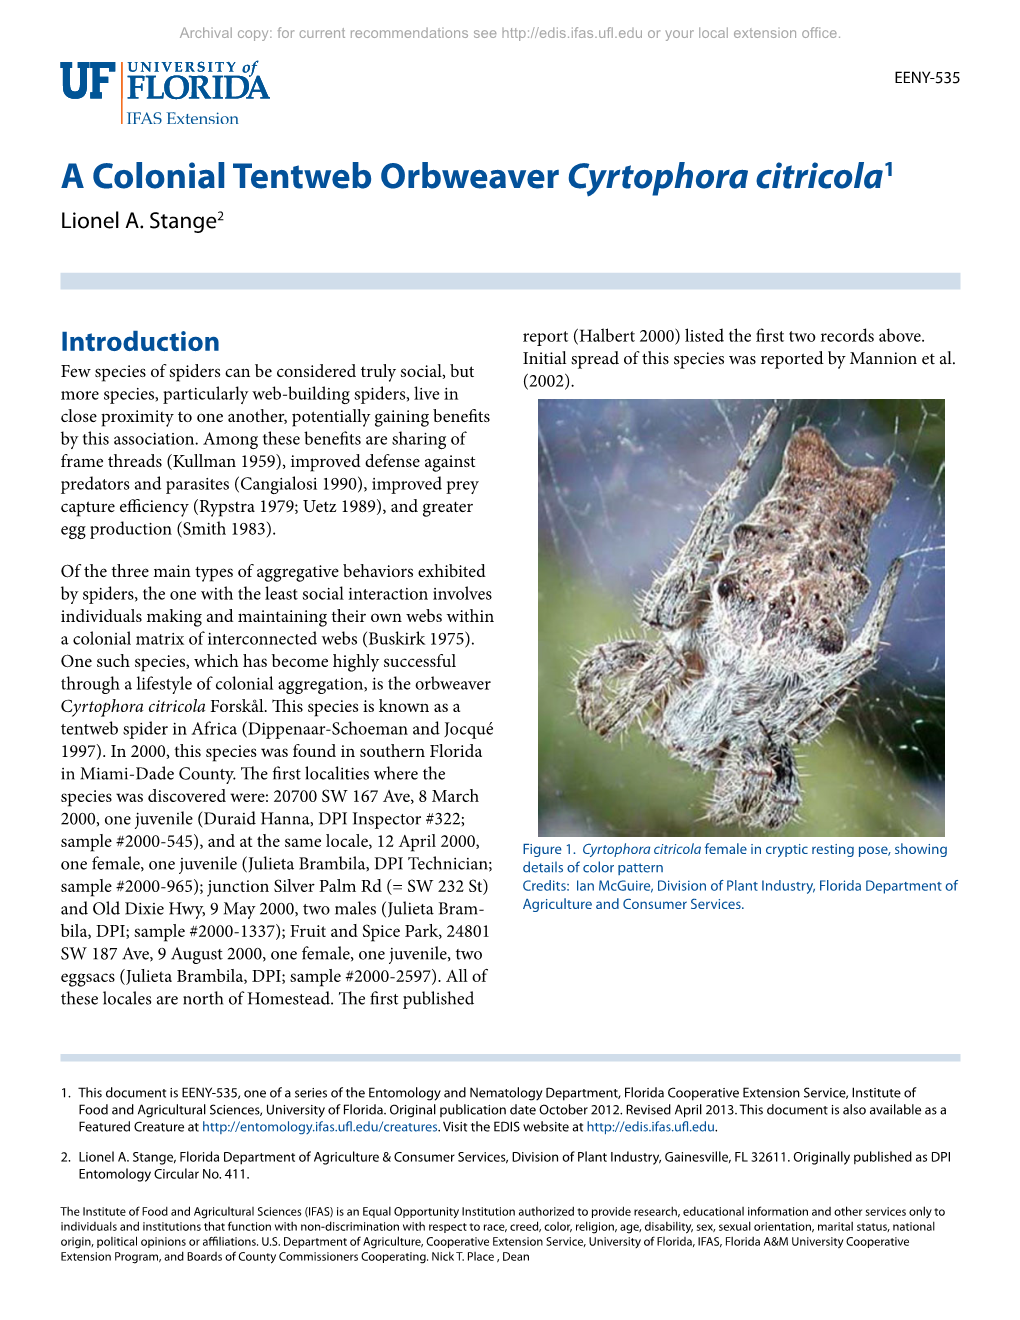 A Colonial Tentweb Orbweaver Cyrtophora Citricola1 Lionel A